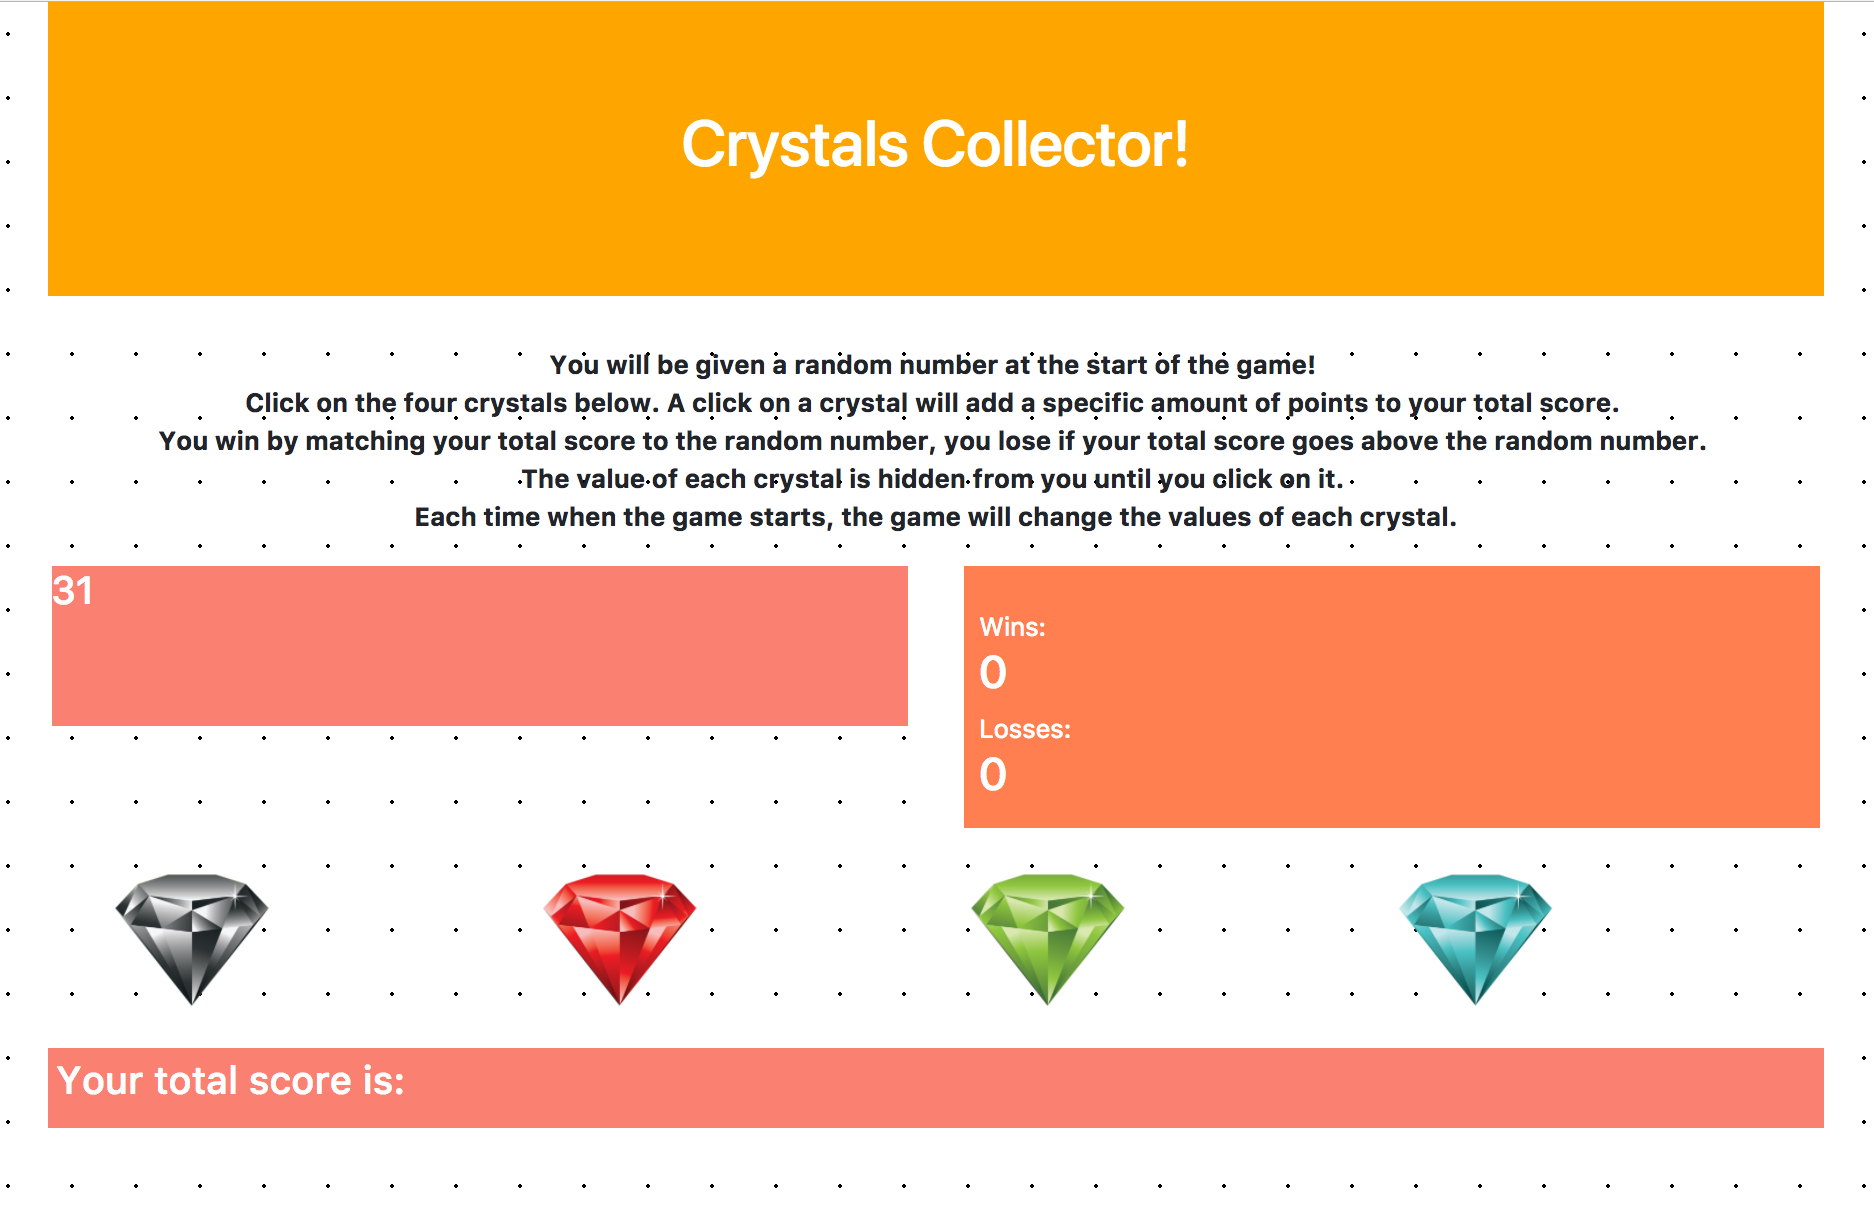 CrystalCollector